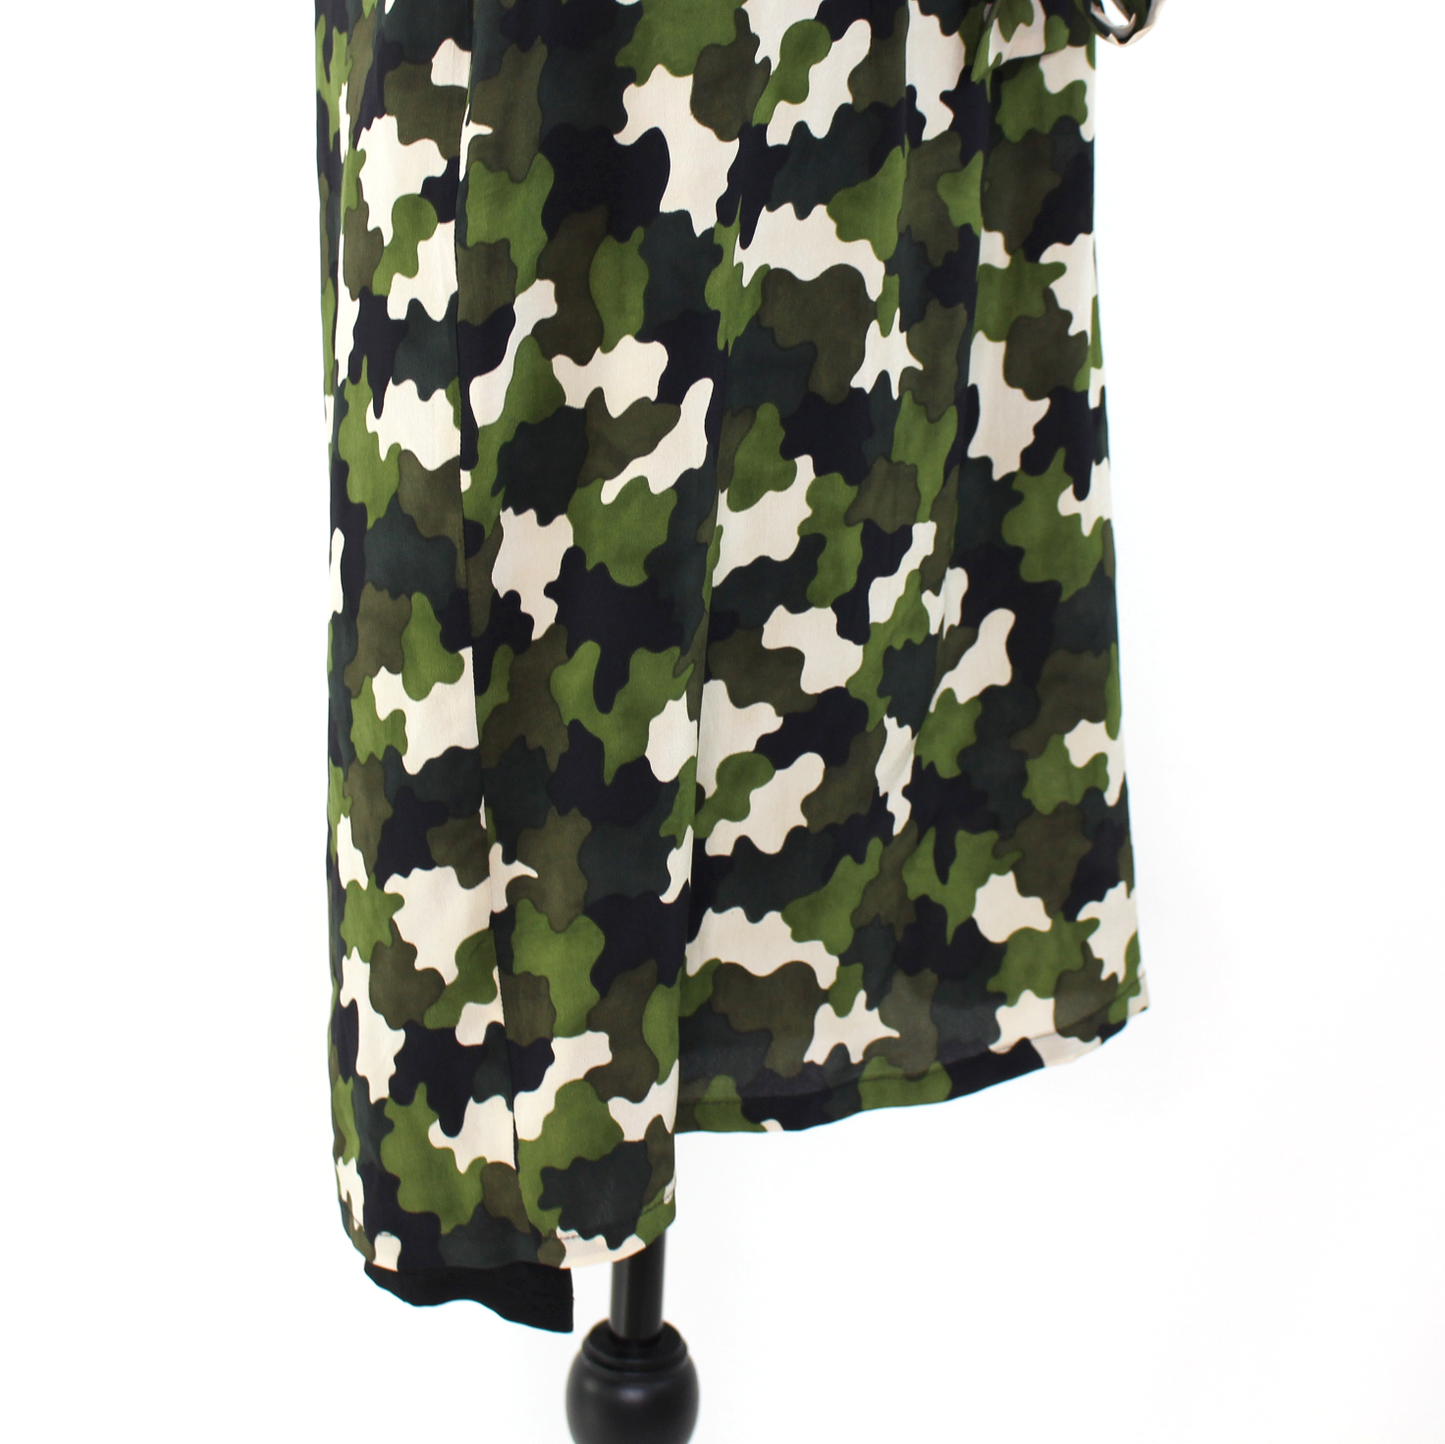 Prada Silk Camouflage Belted Dress